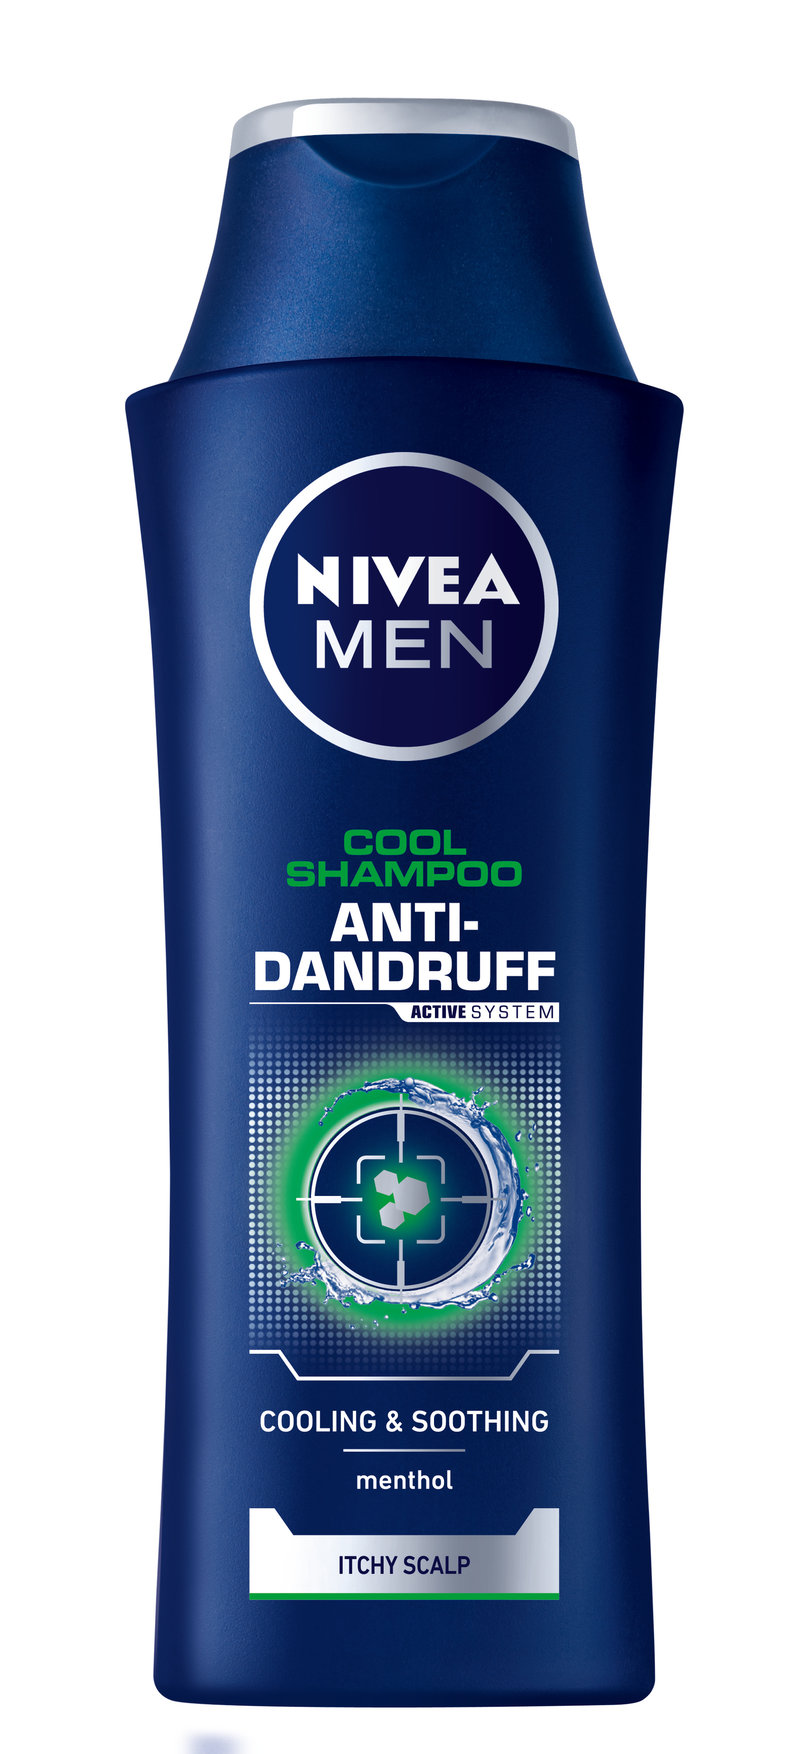 Shampoo Cool Nivea Men šamponi protiv peruti